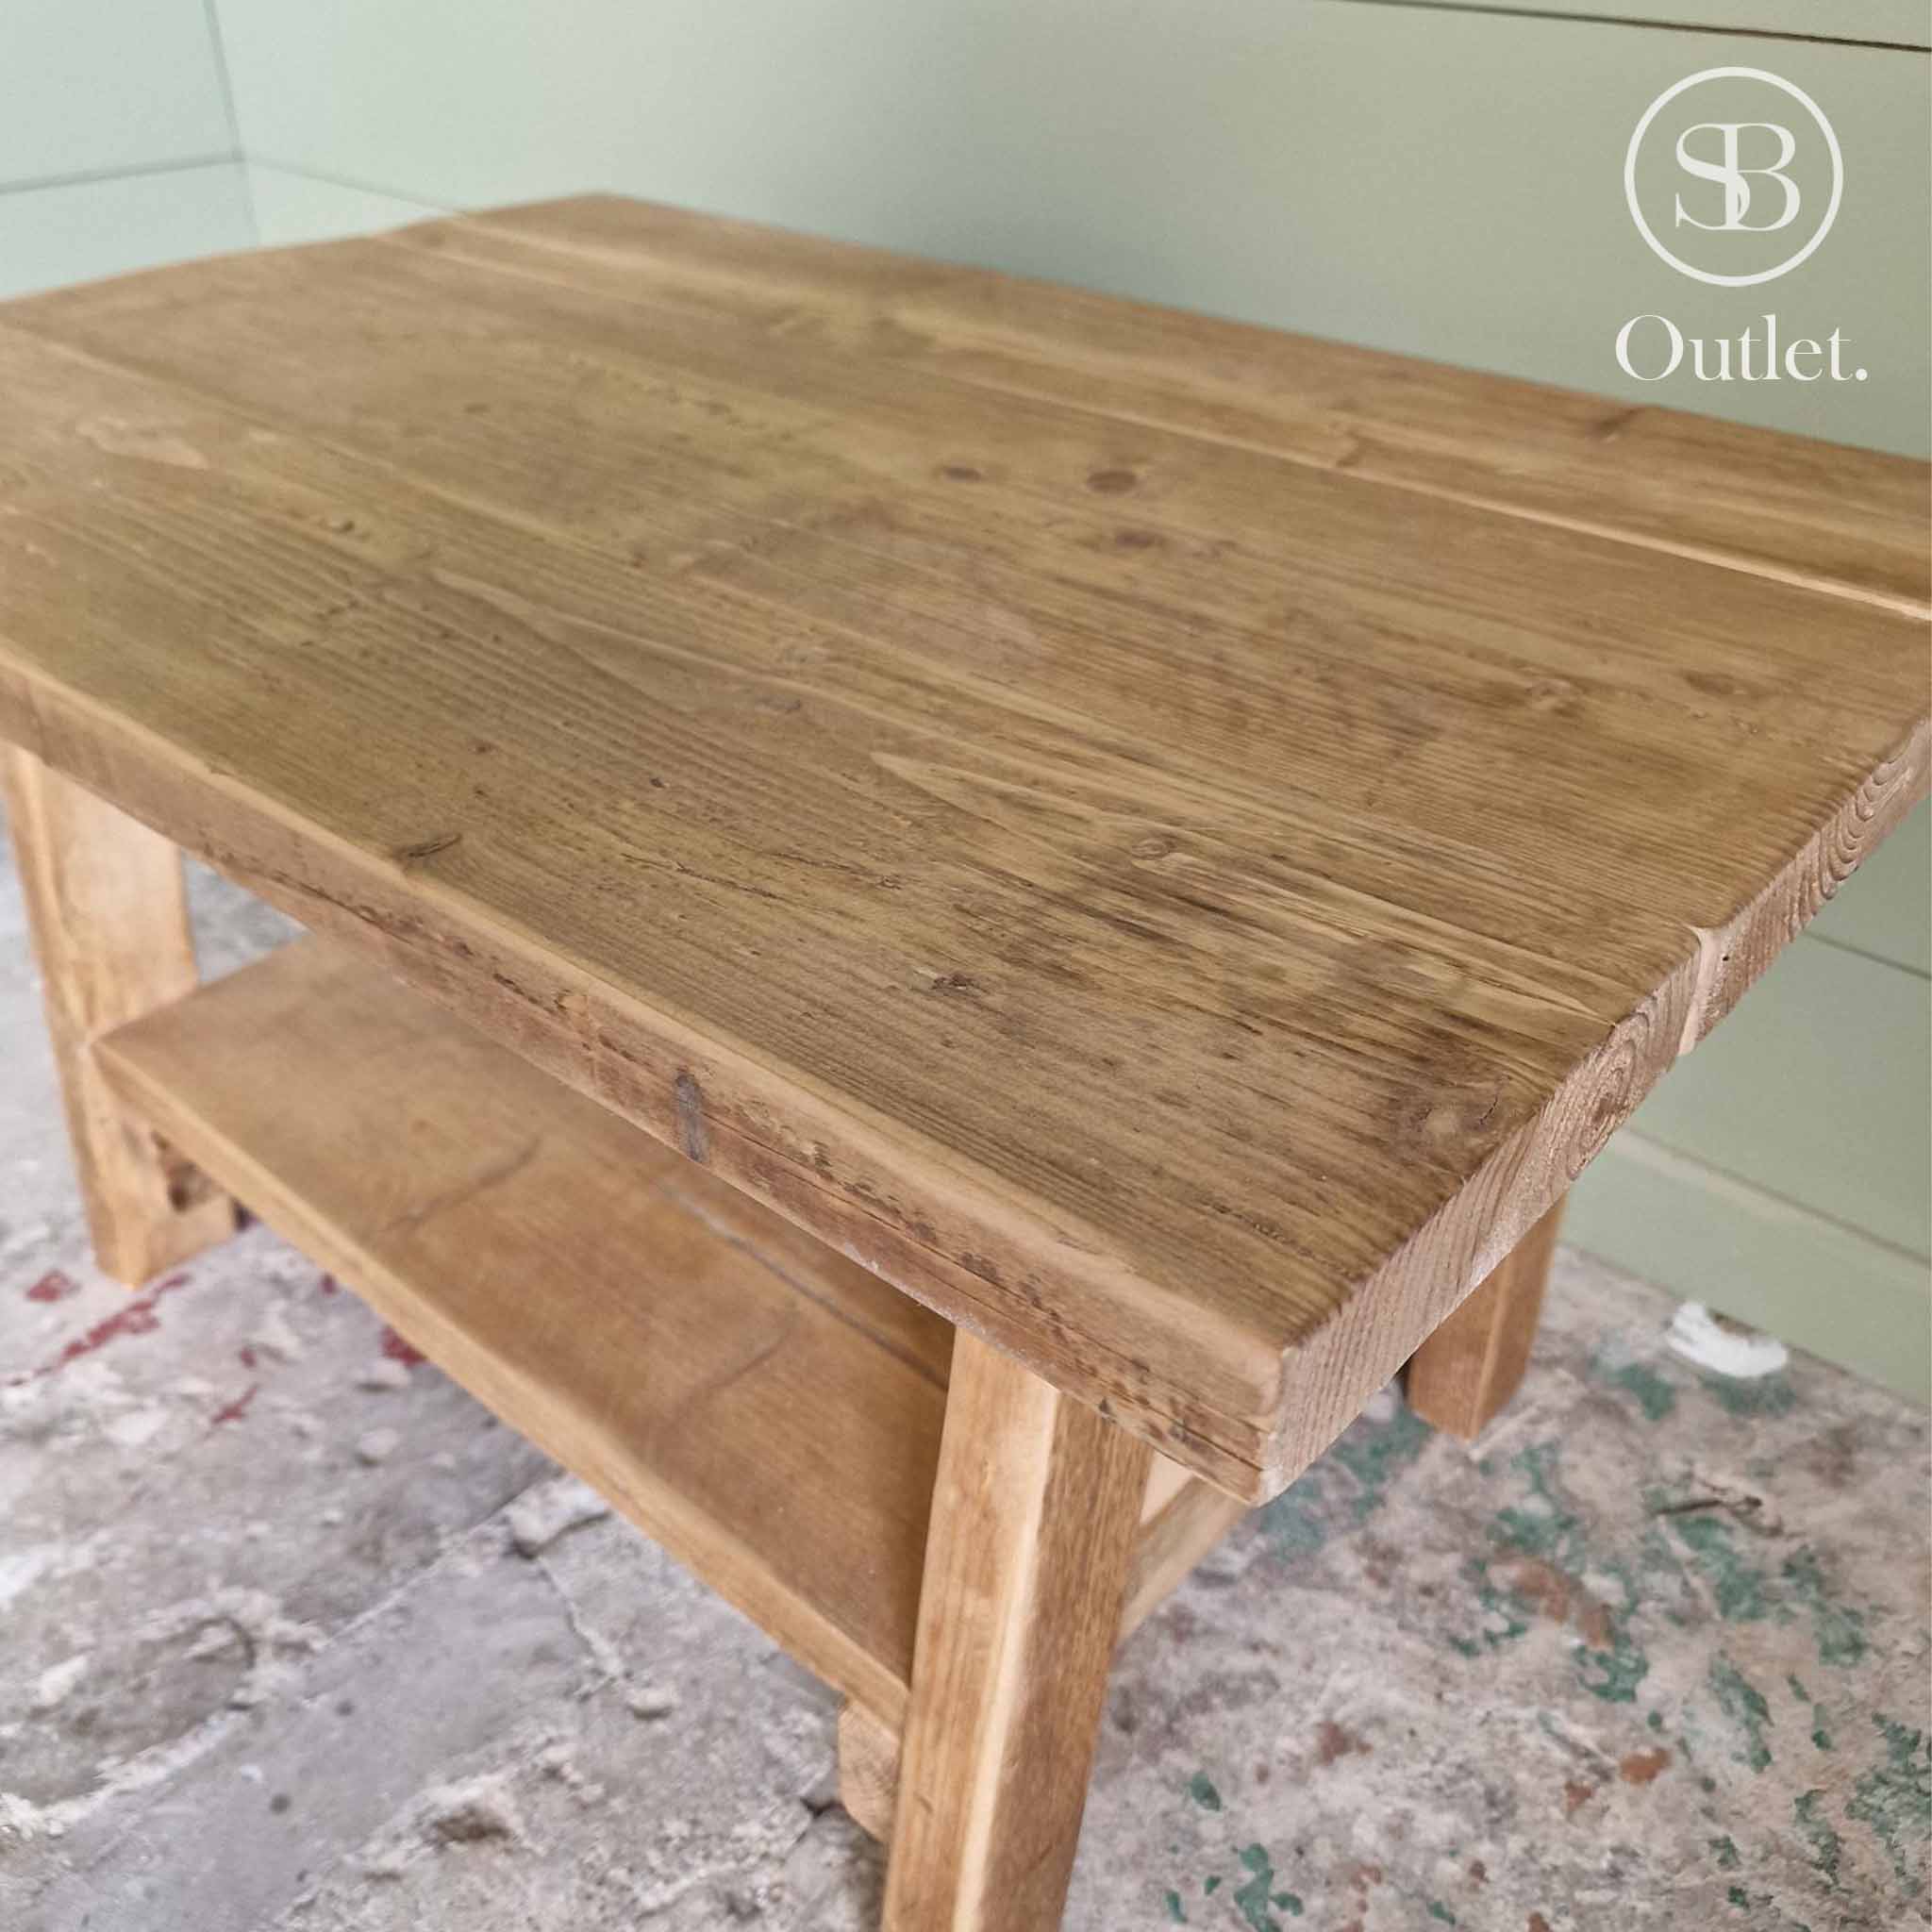 Splay Coffee Table - 80cm Long x 54cm Deep - Antique Oak (very light)